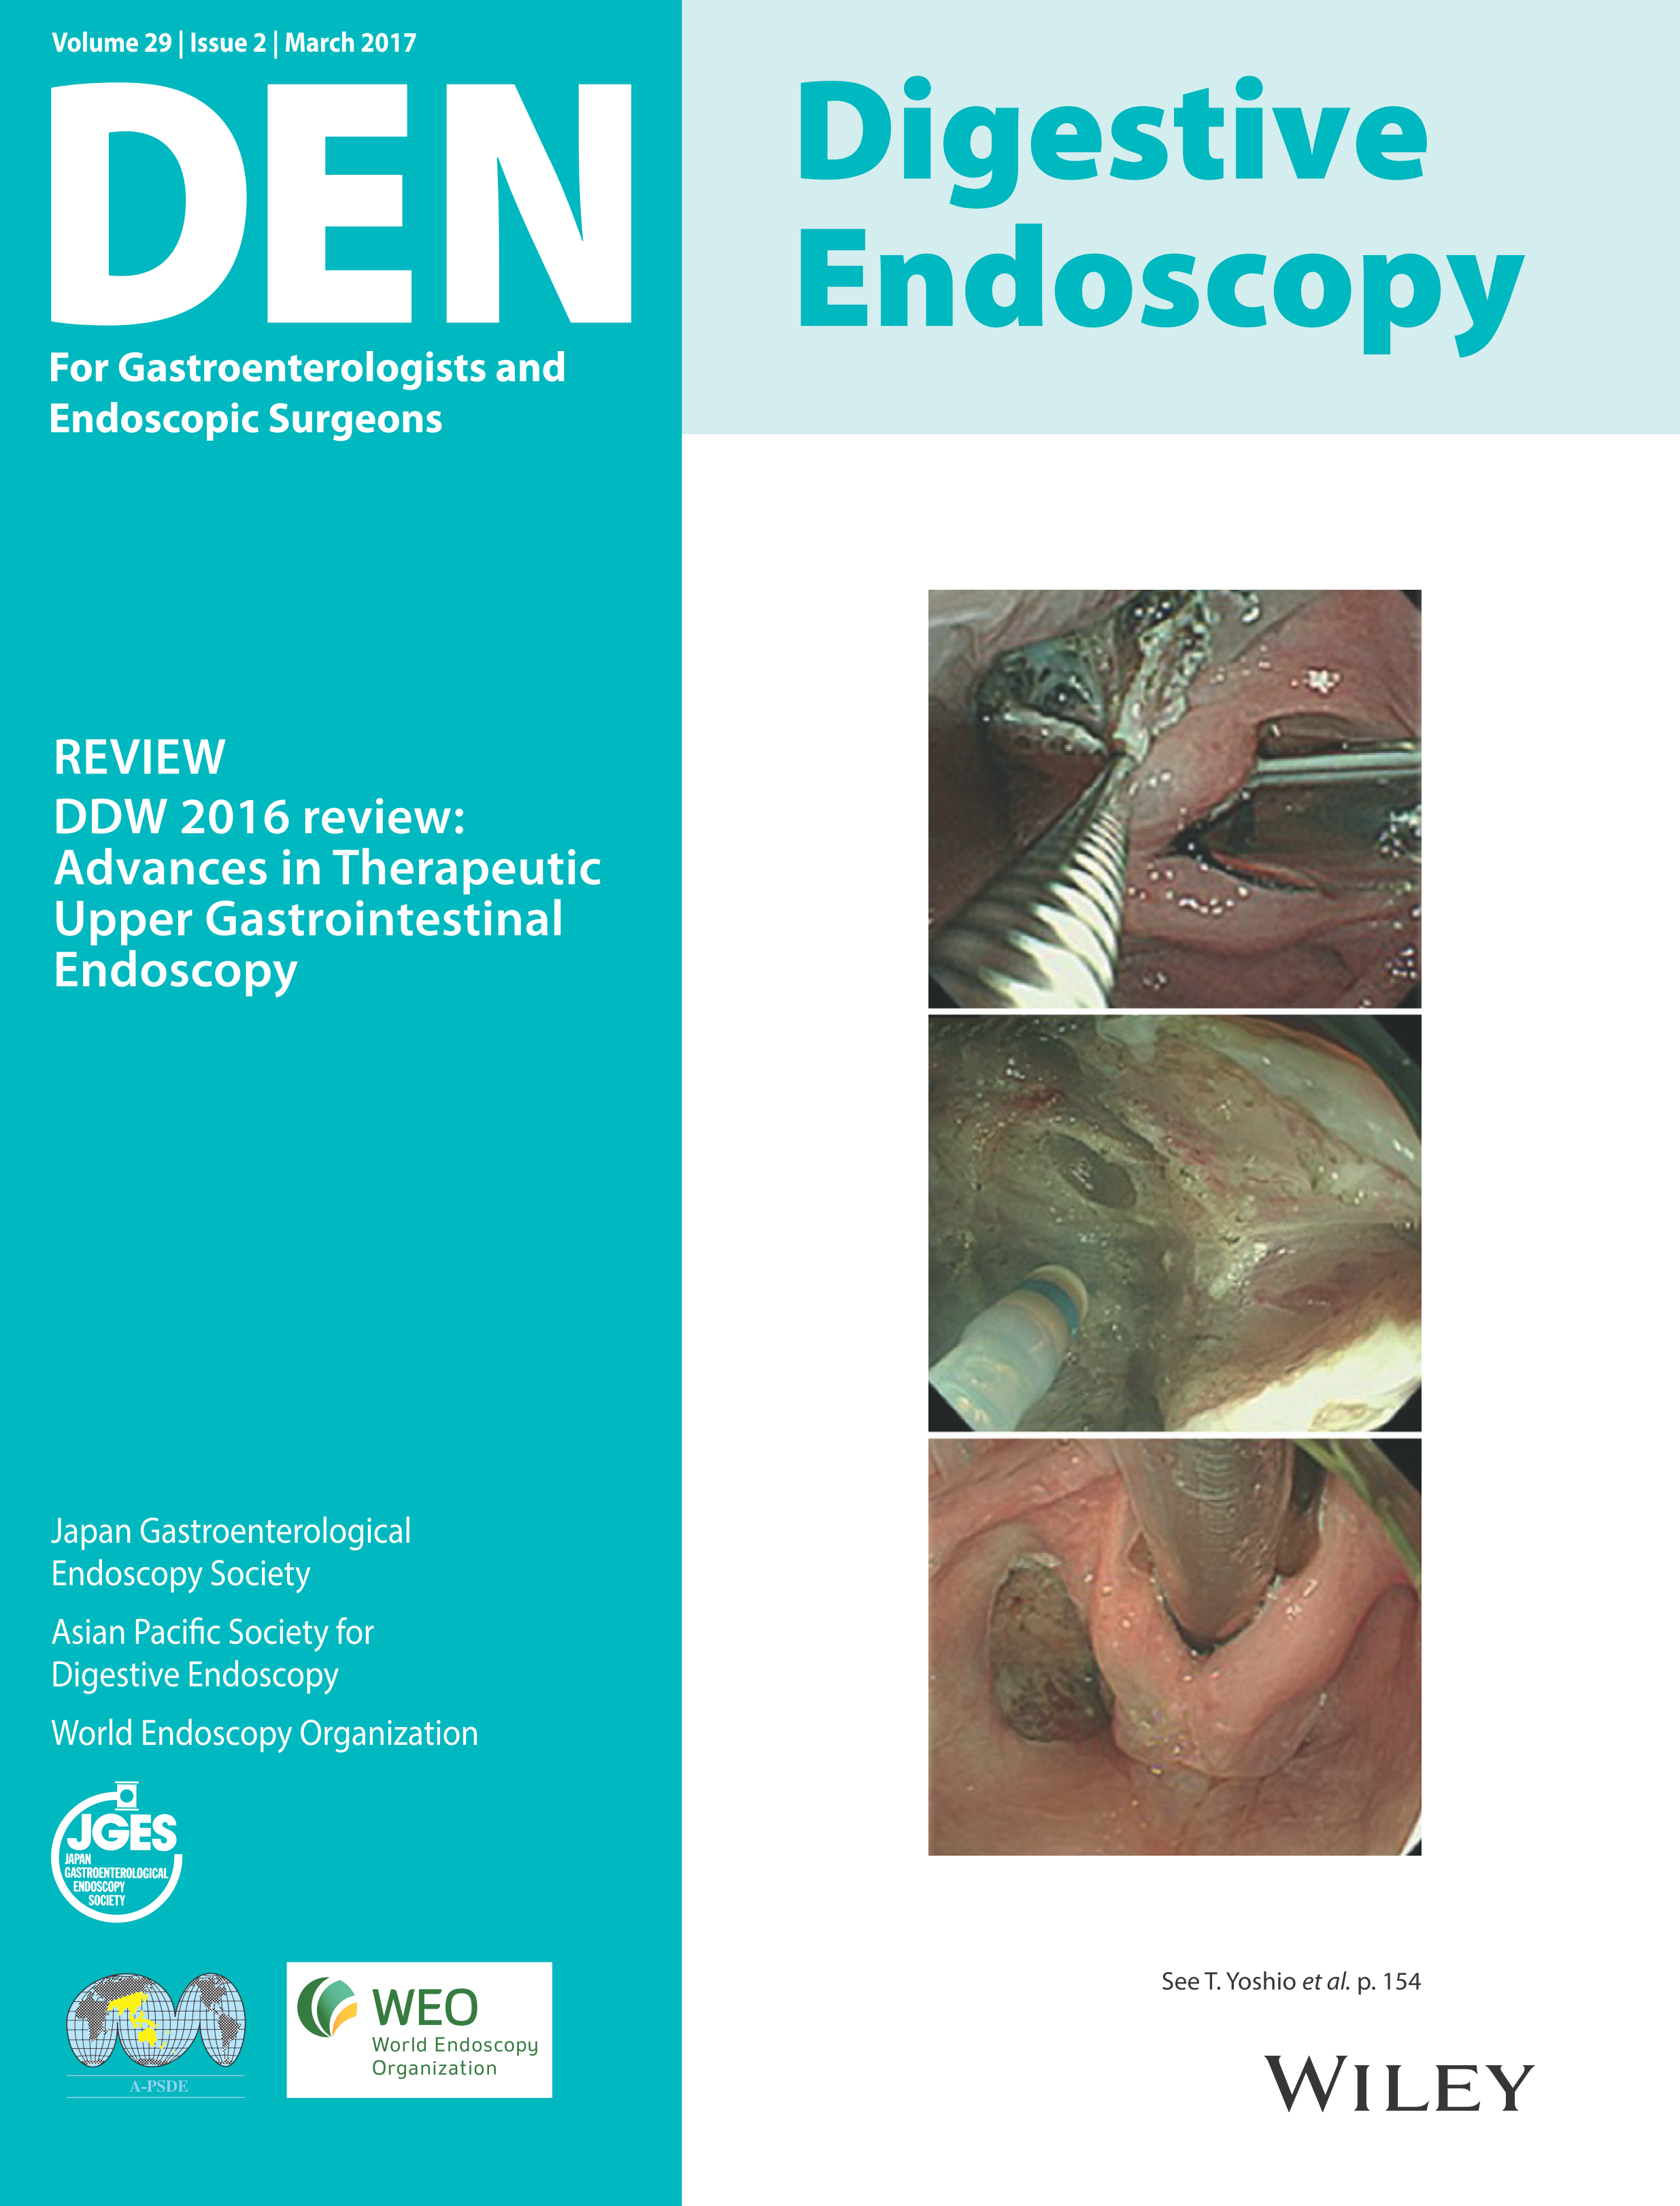 Digestive Endoscopy Vol29-2